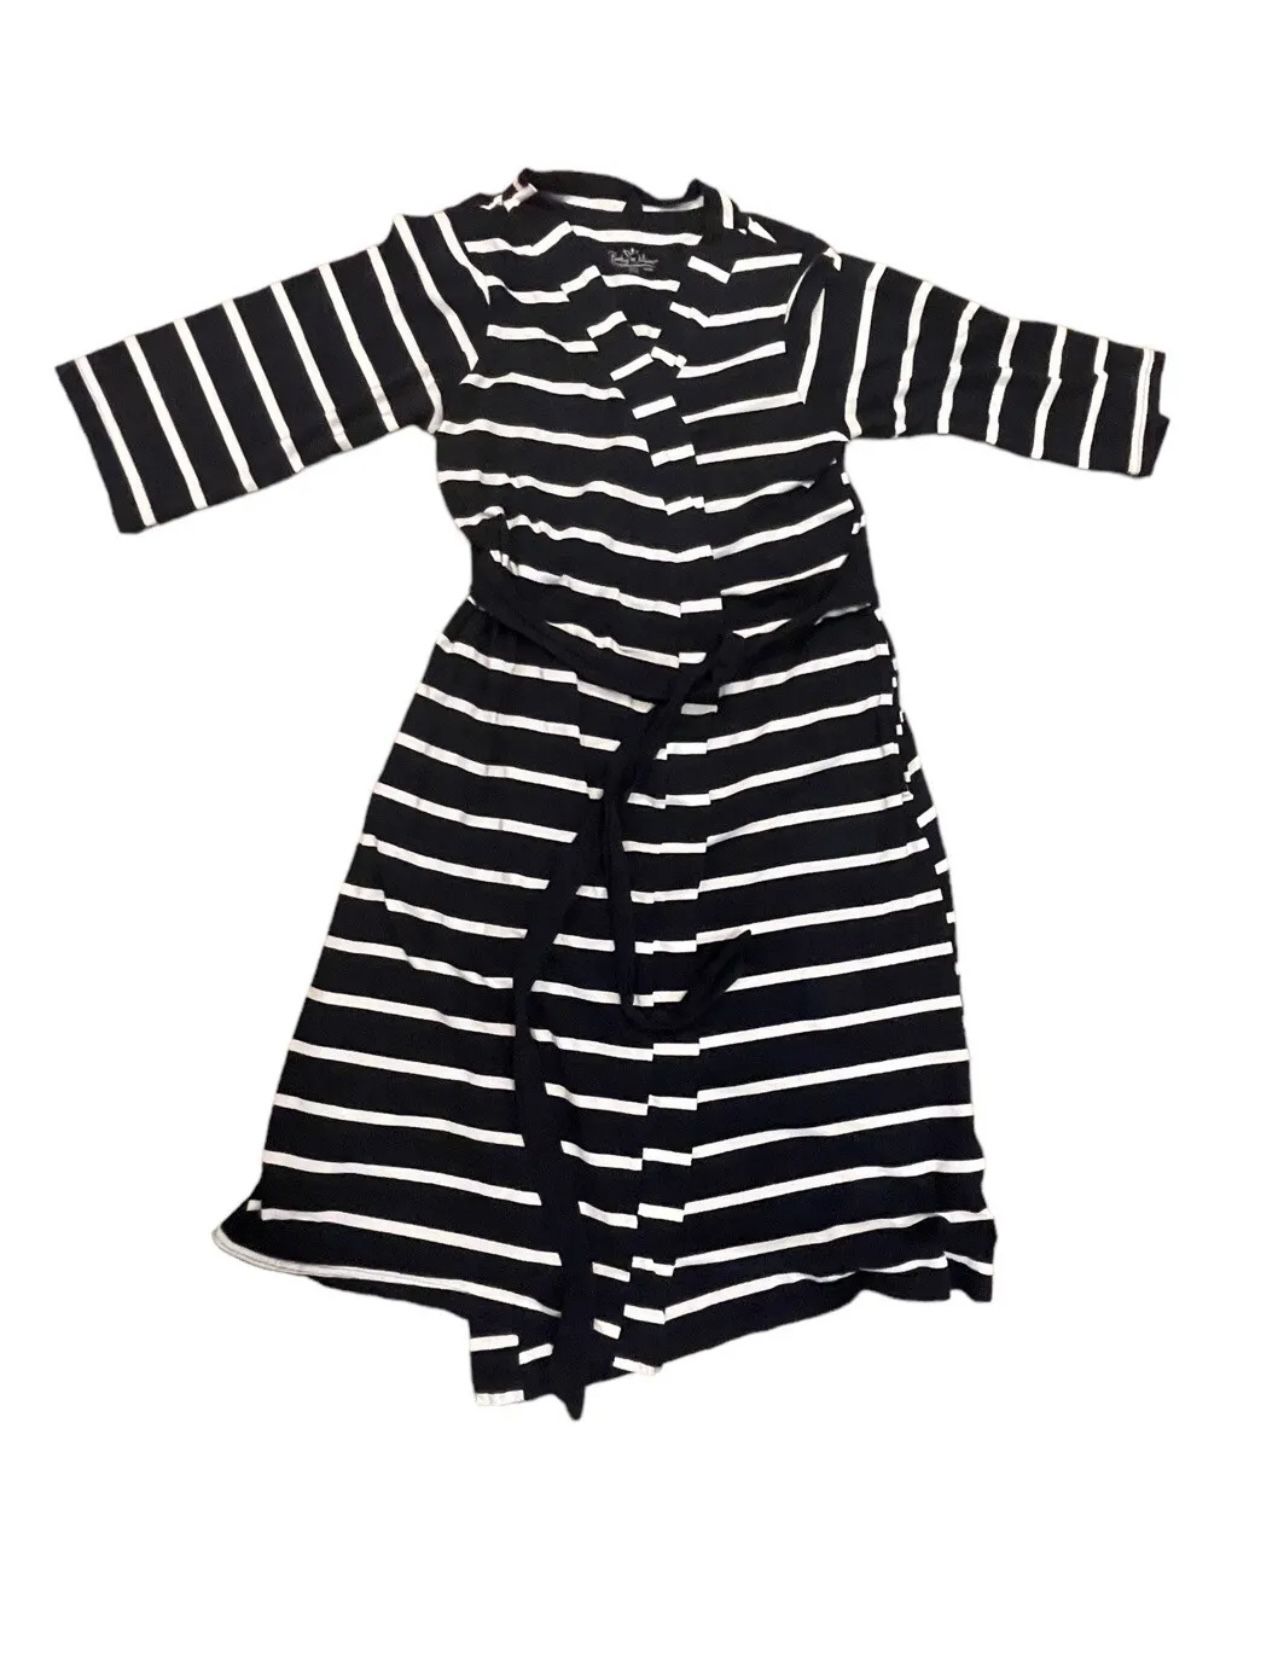 Baby Be Mine Maternity, Nursing, Dress, Blue & White Stripes Size Small/Medium